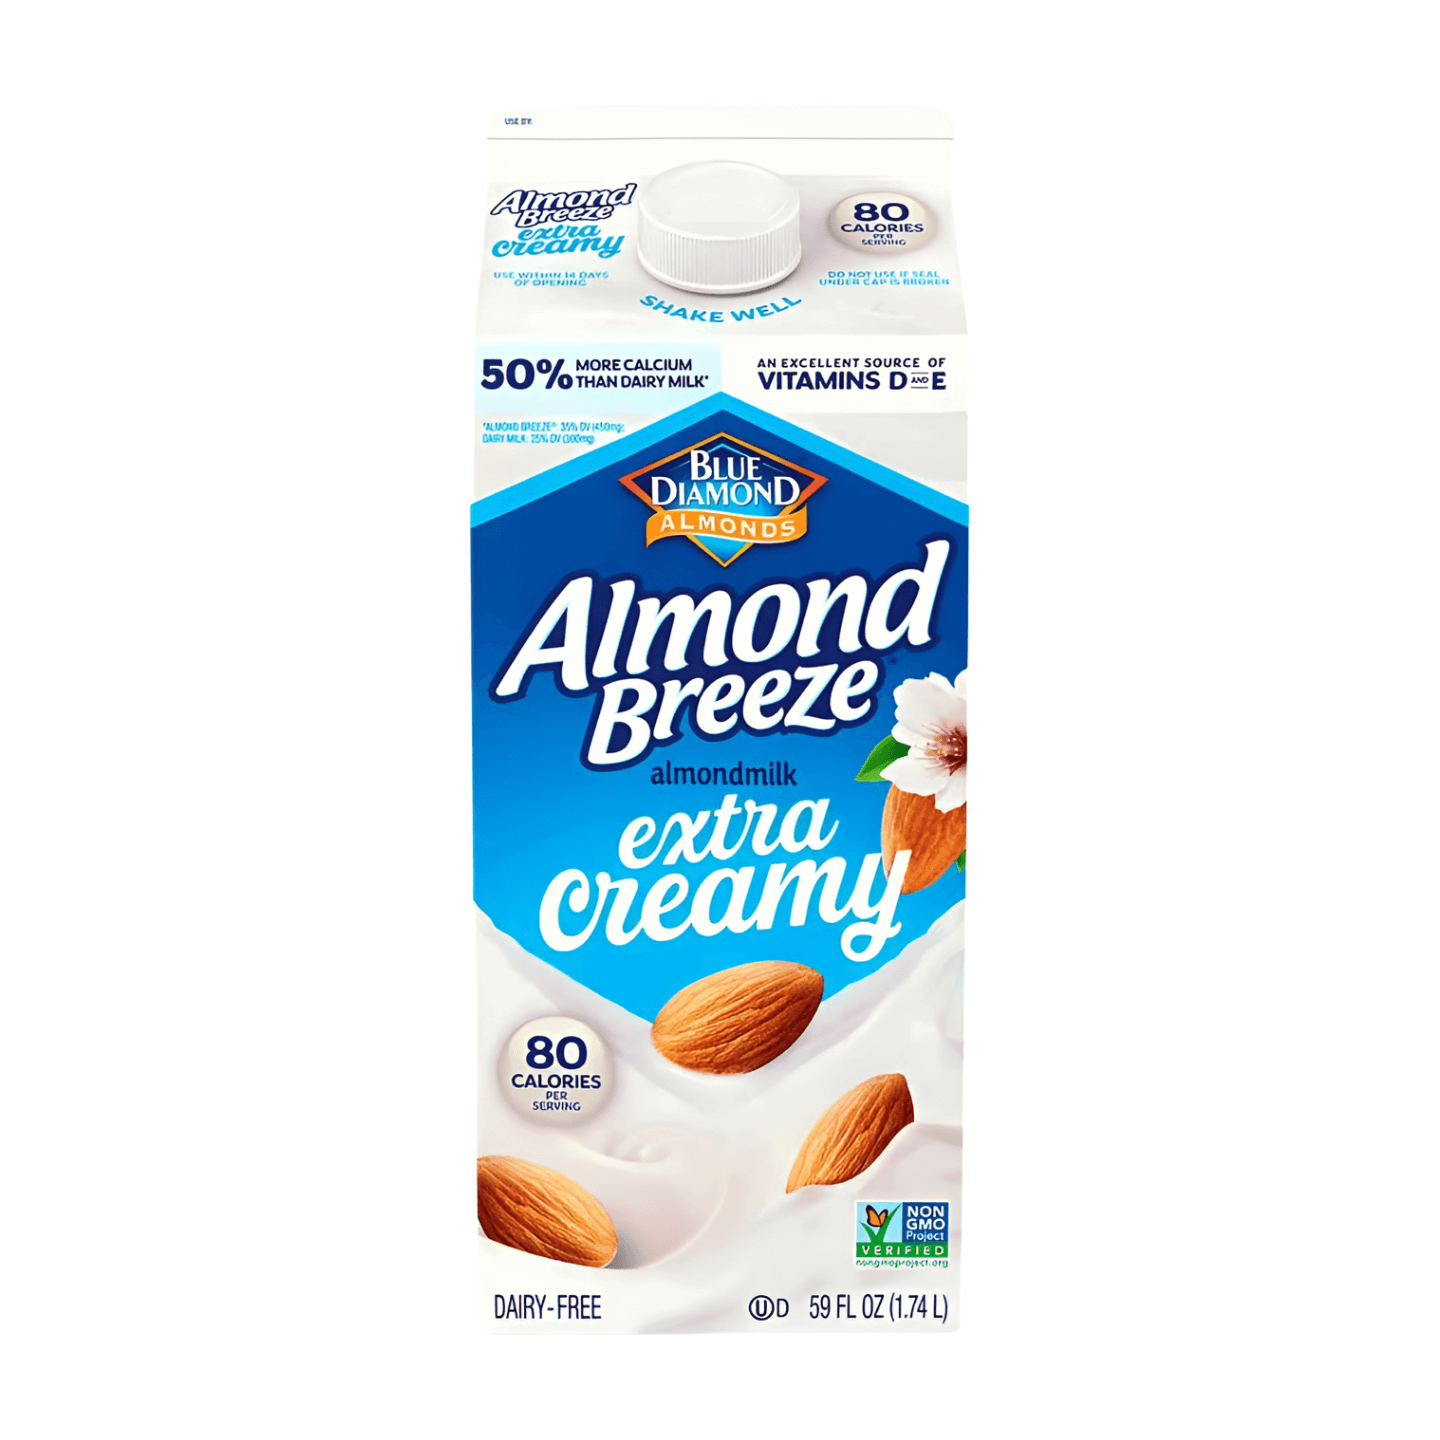 Almond Breeze Extra Creamy Almondmilk